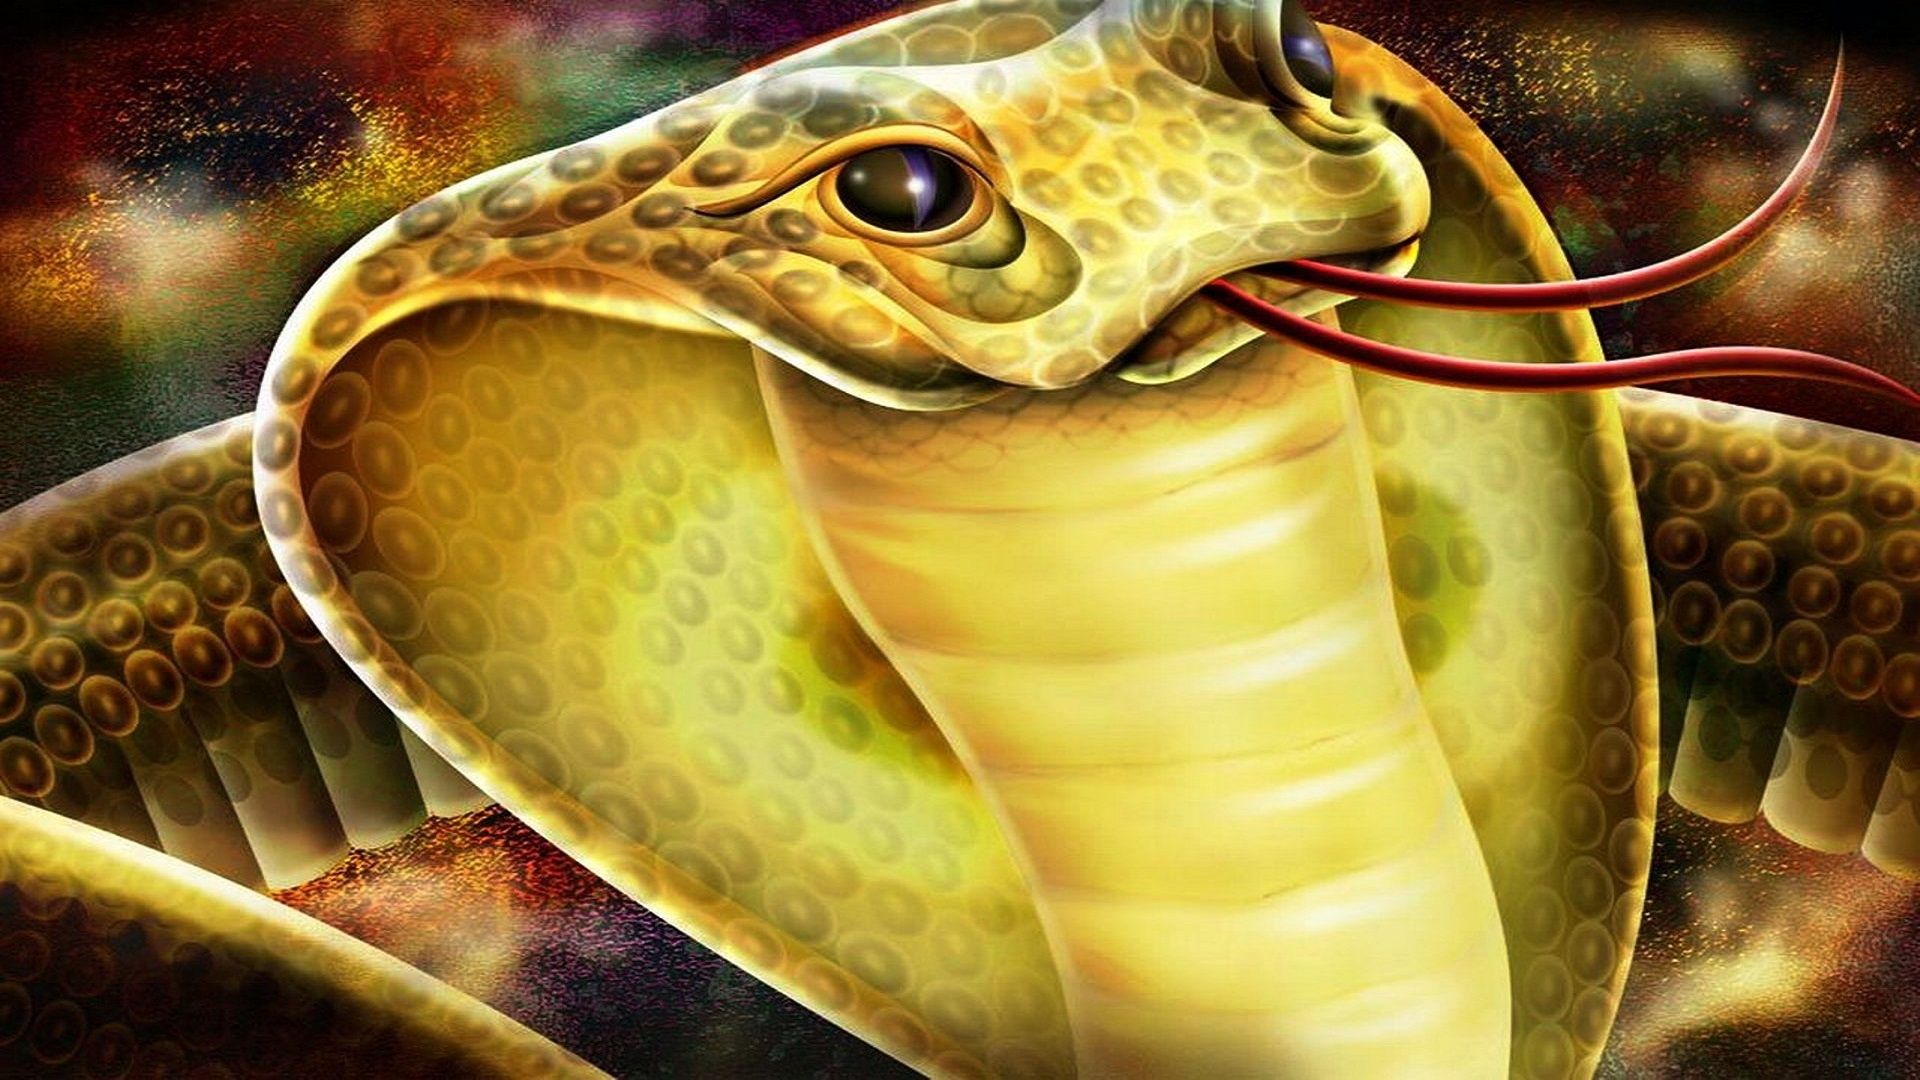 re cobra download di sfondi hd,serpente,rettile,serpente,elapidae